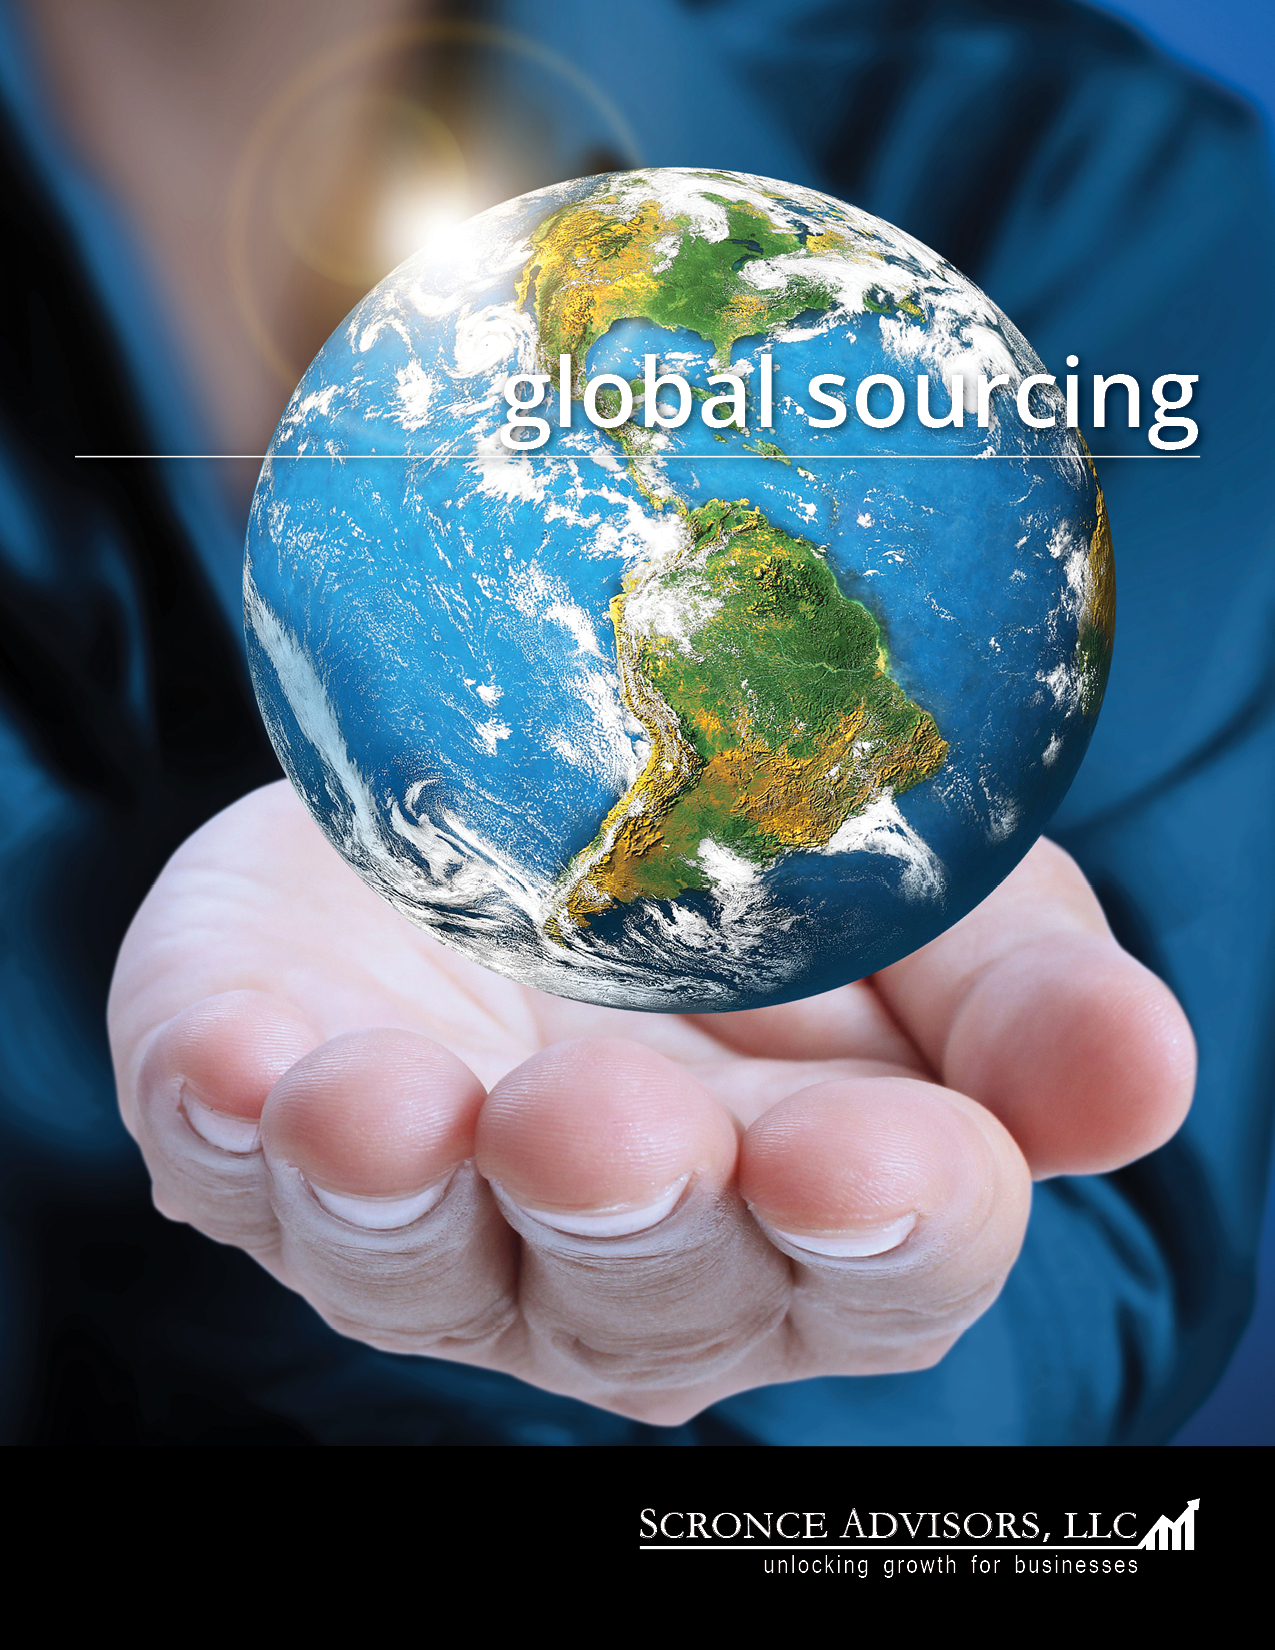 Scronce Advisors, LLC Global Sourcing Brochure